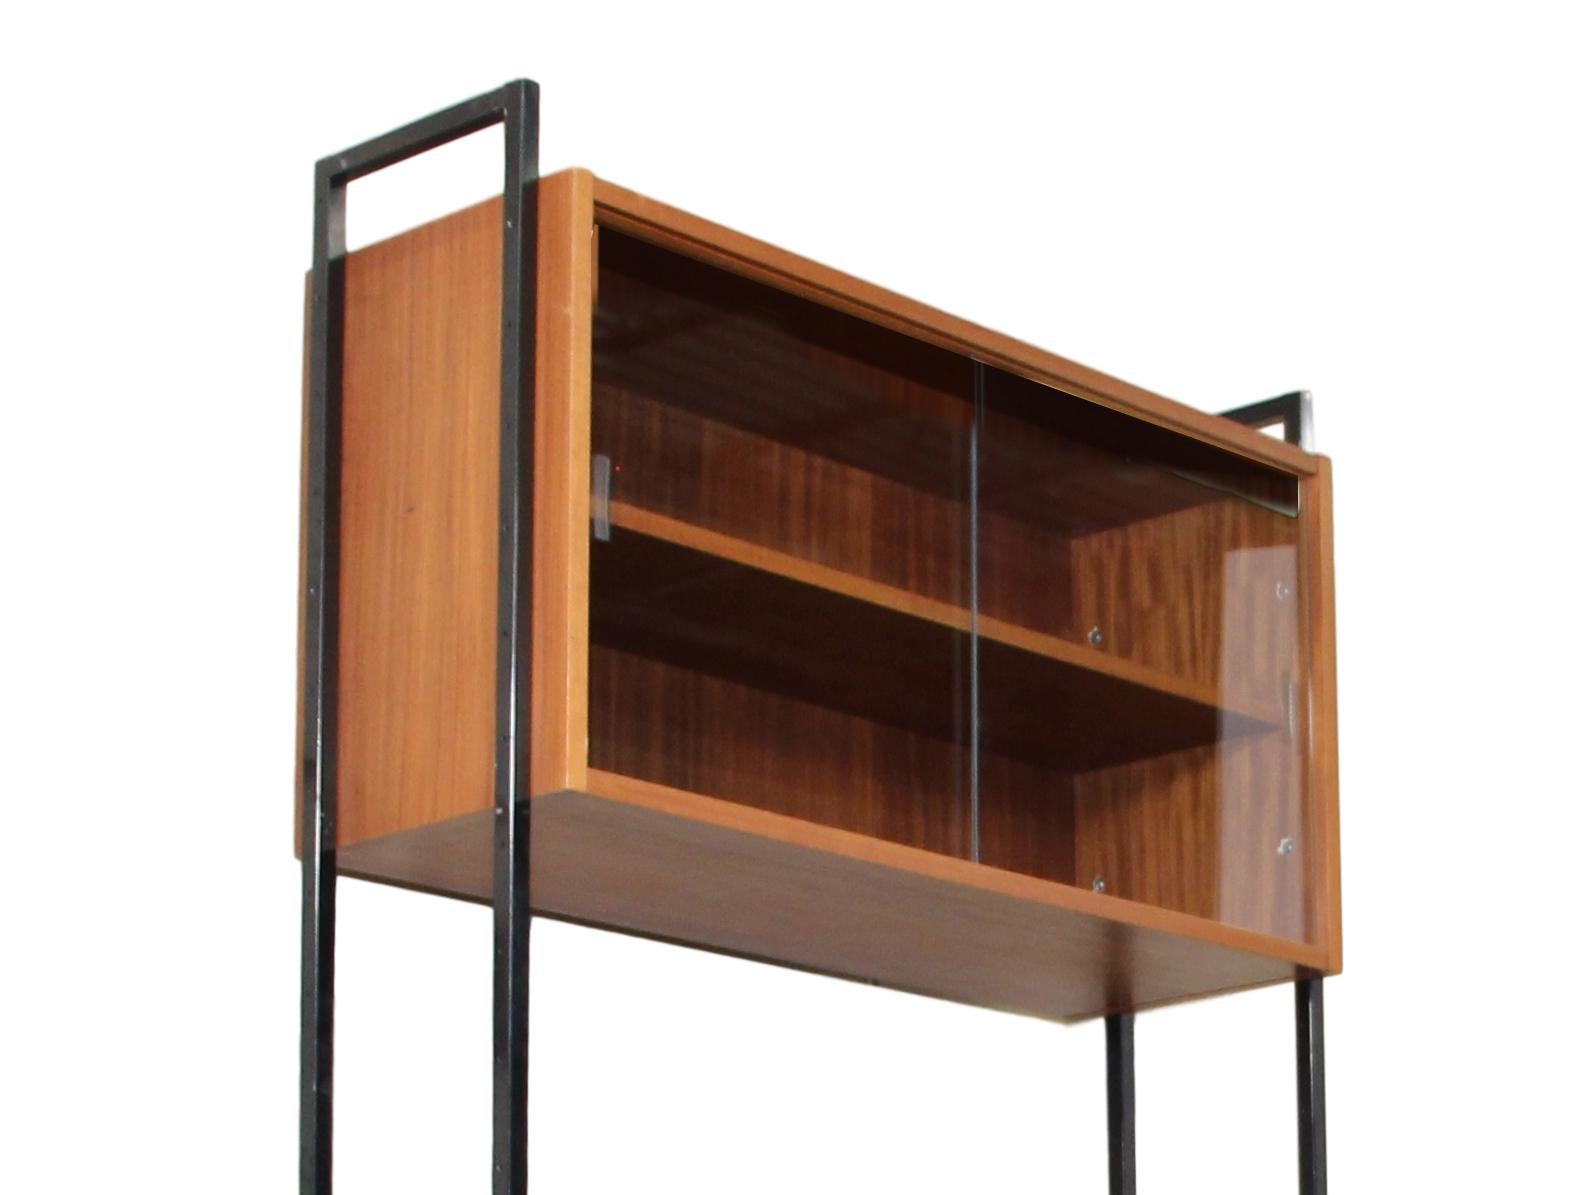 1960s furniture uk